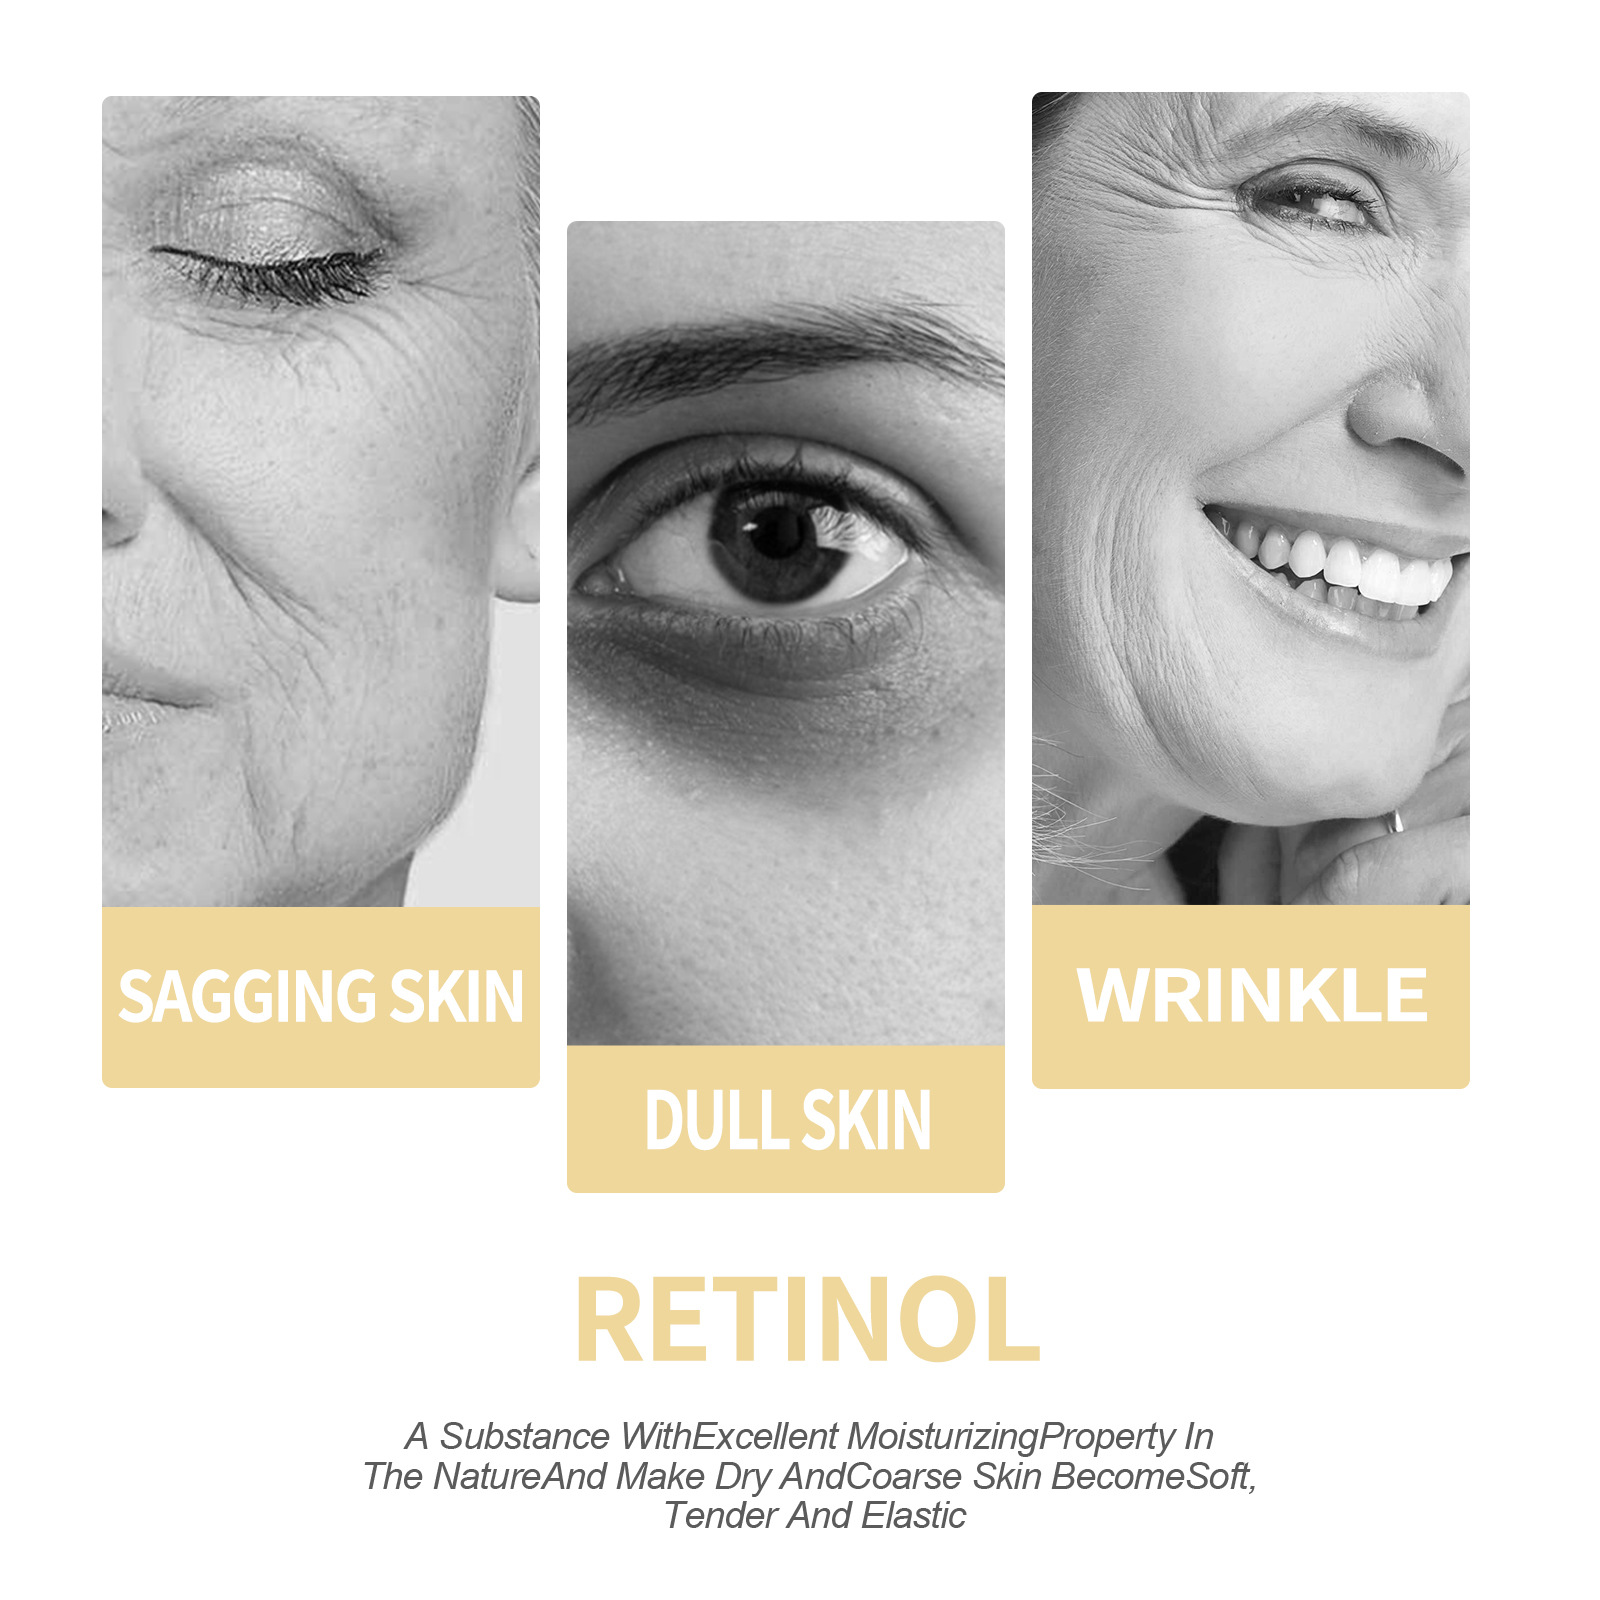 Eelhoe Firming Cream Fading Wrinkle Firming Facial Collagen Cream